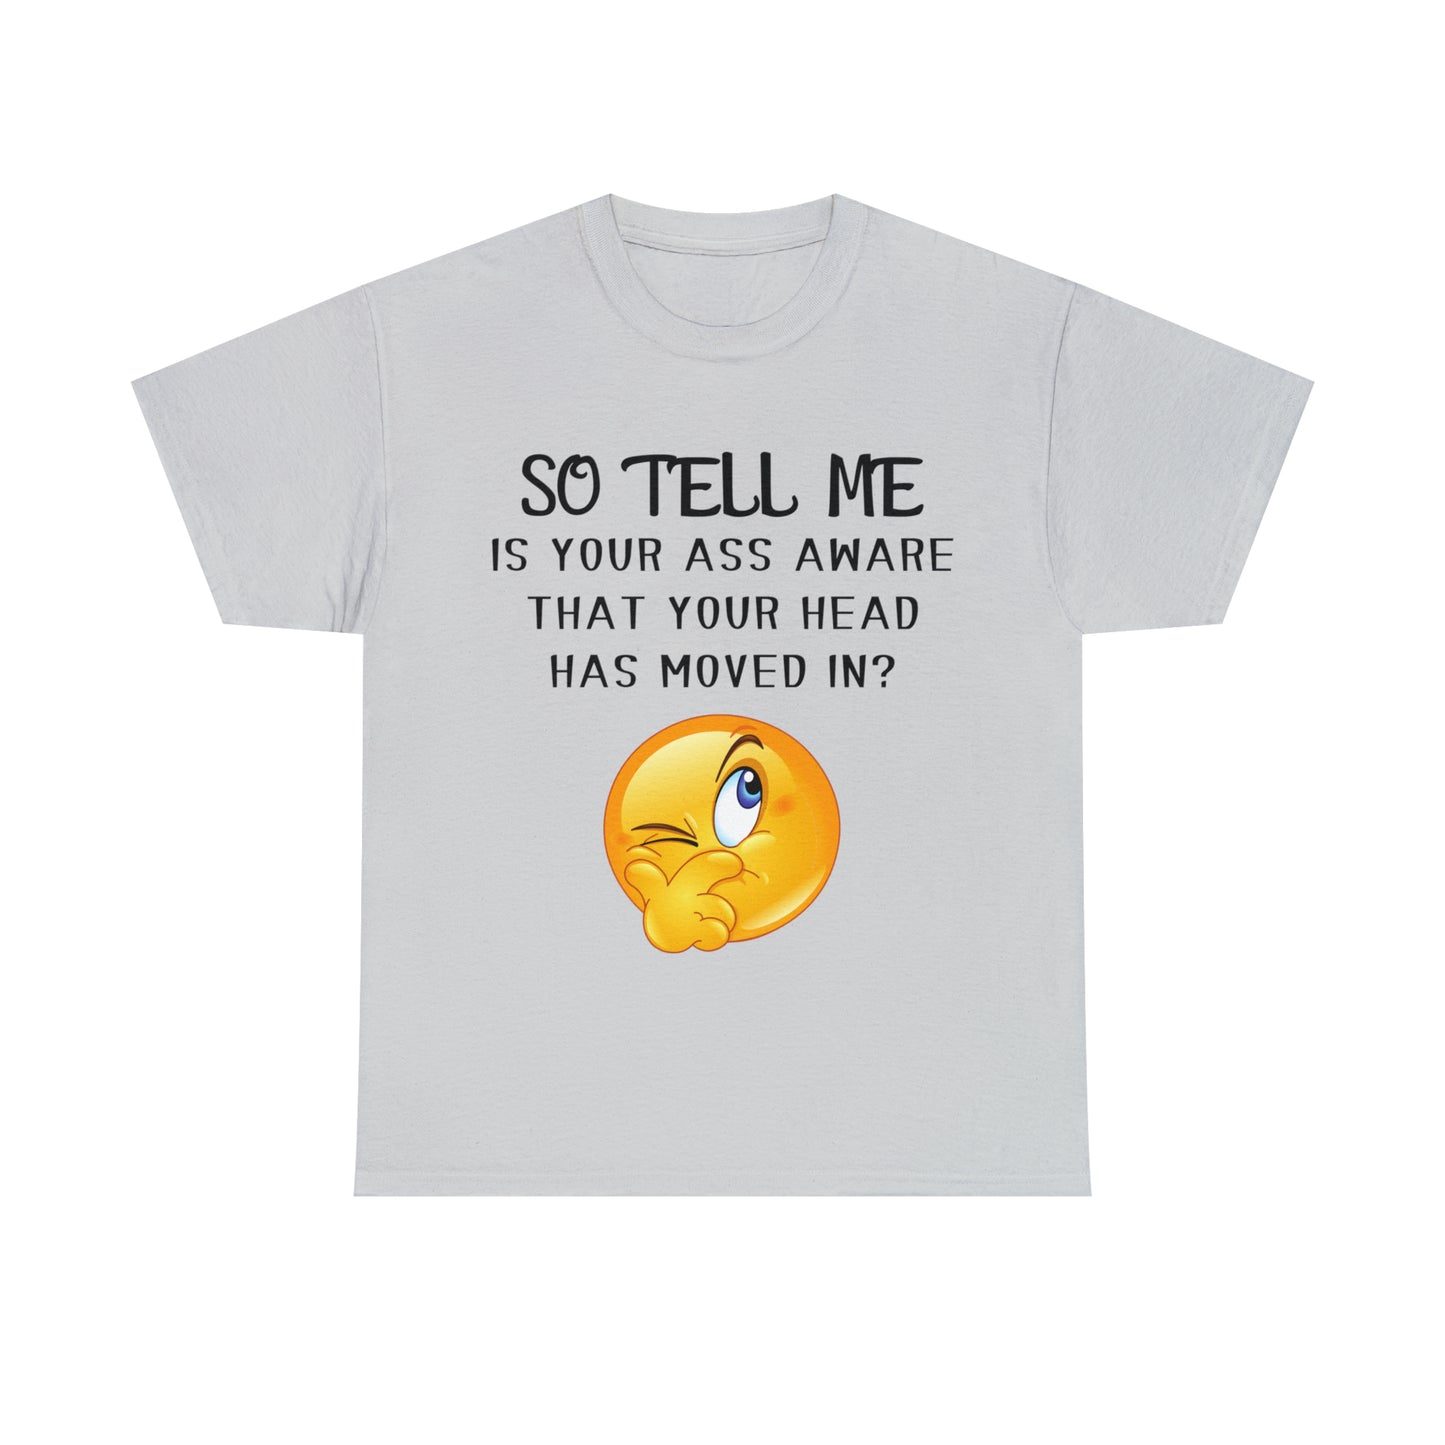 Funny Sarcastic Shirt, Funny Shirt for Men, Fathers Day Gift, Husband Gift, Humor T-shirt, Dad Gift,  Men's Shirt